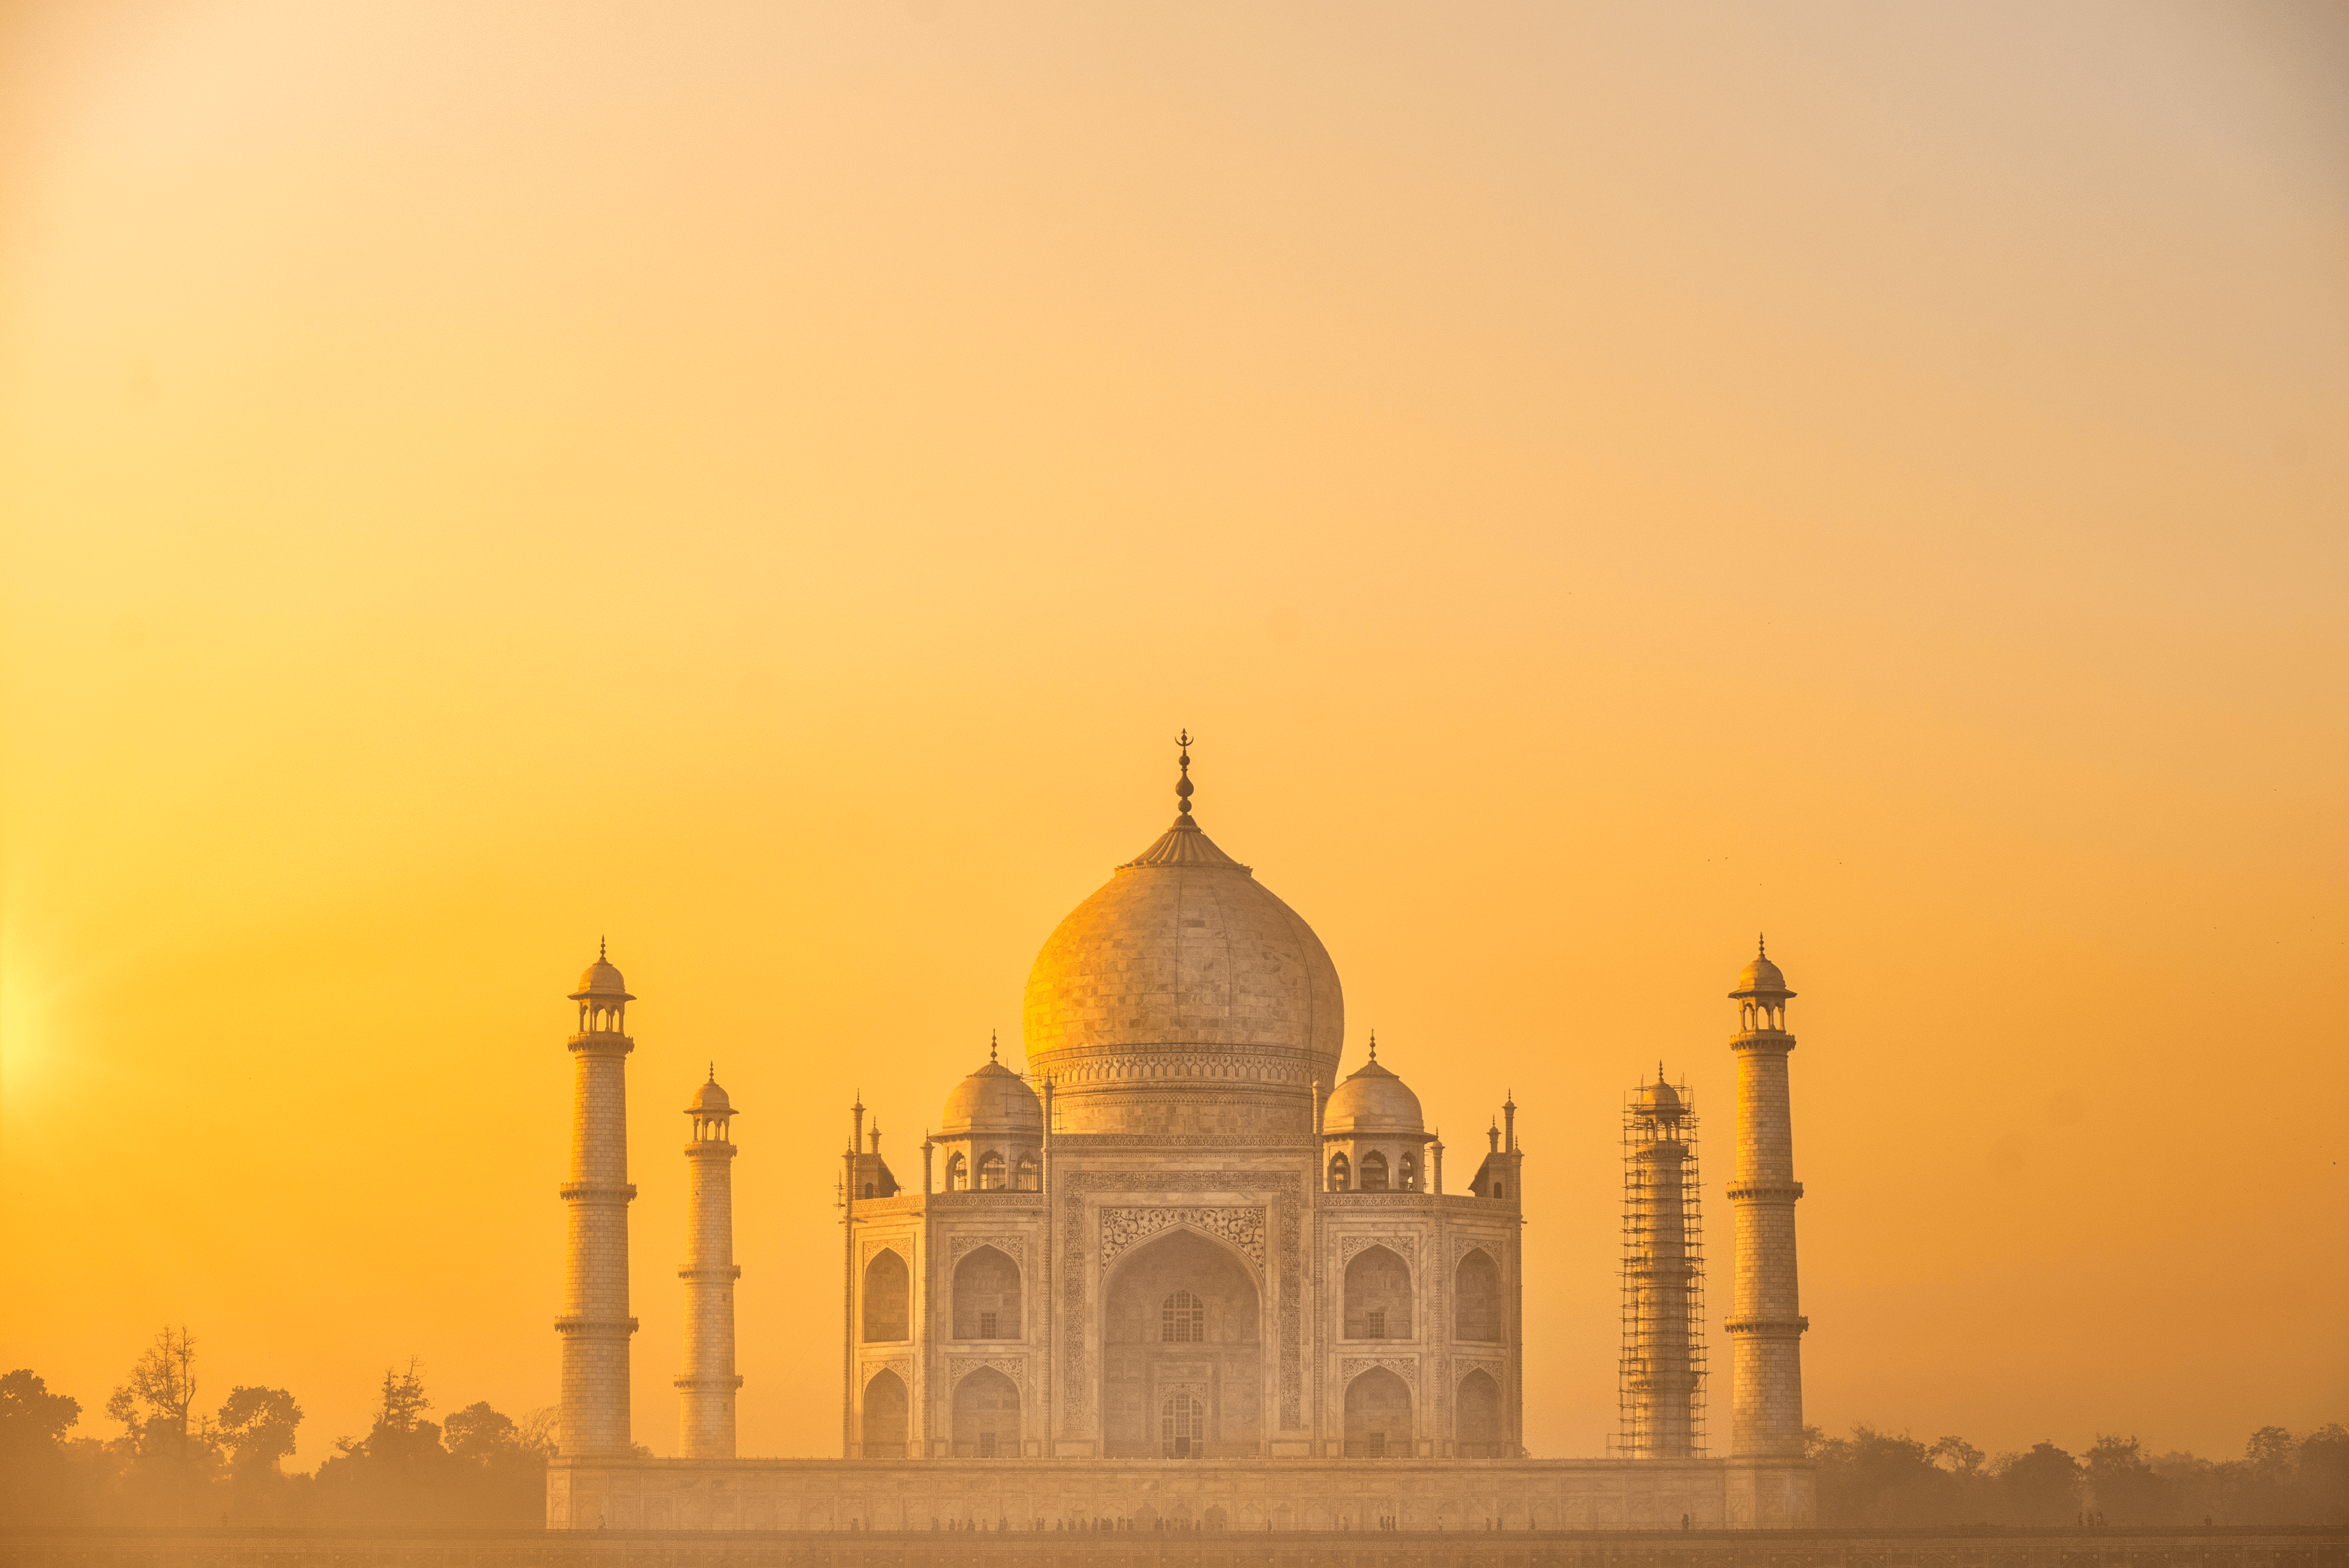 The Golden Taj